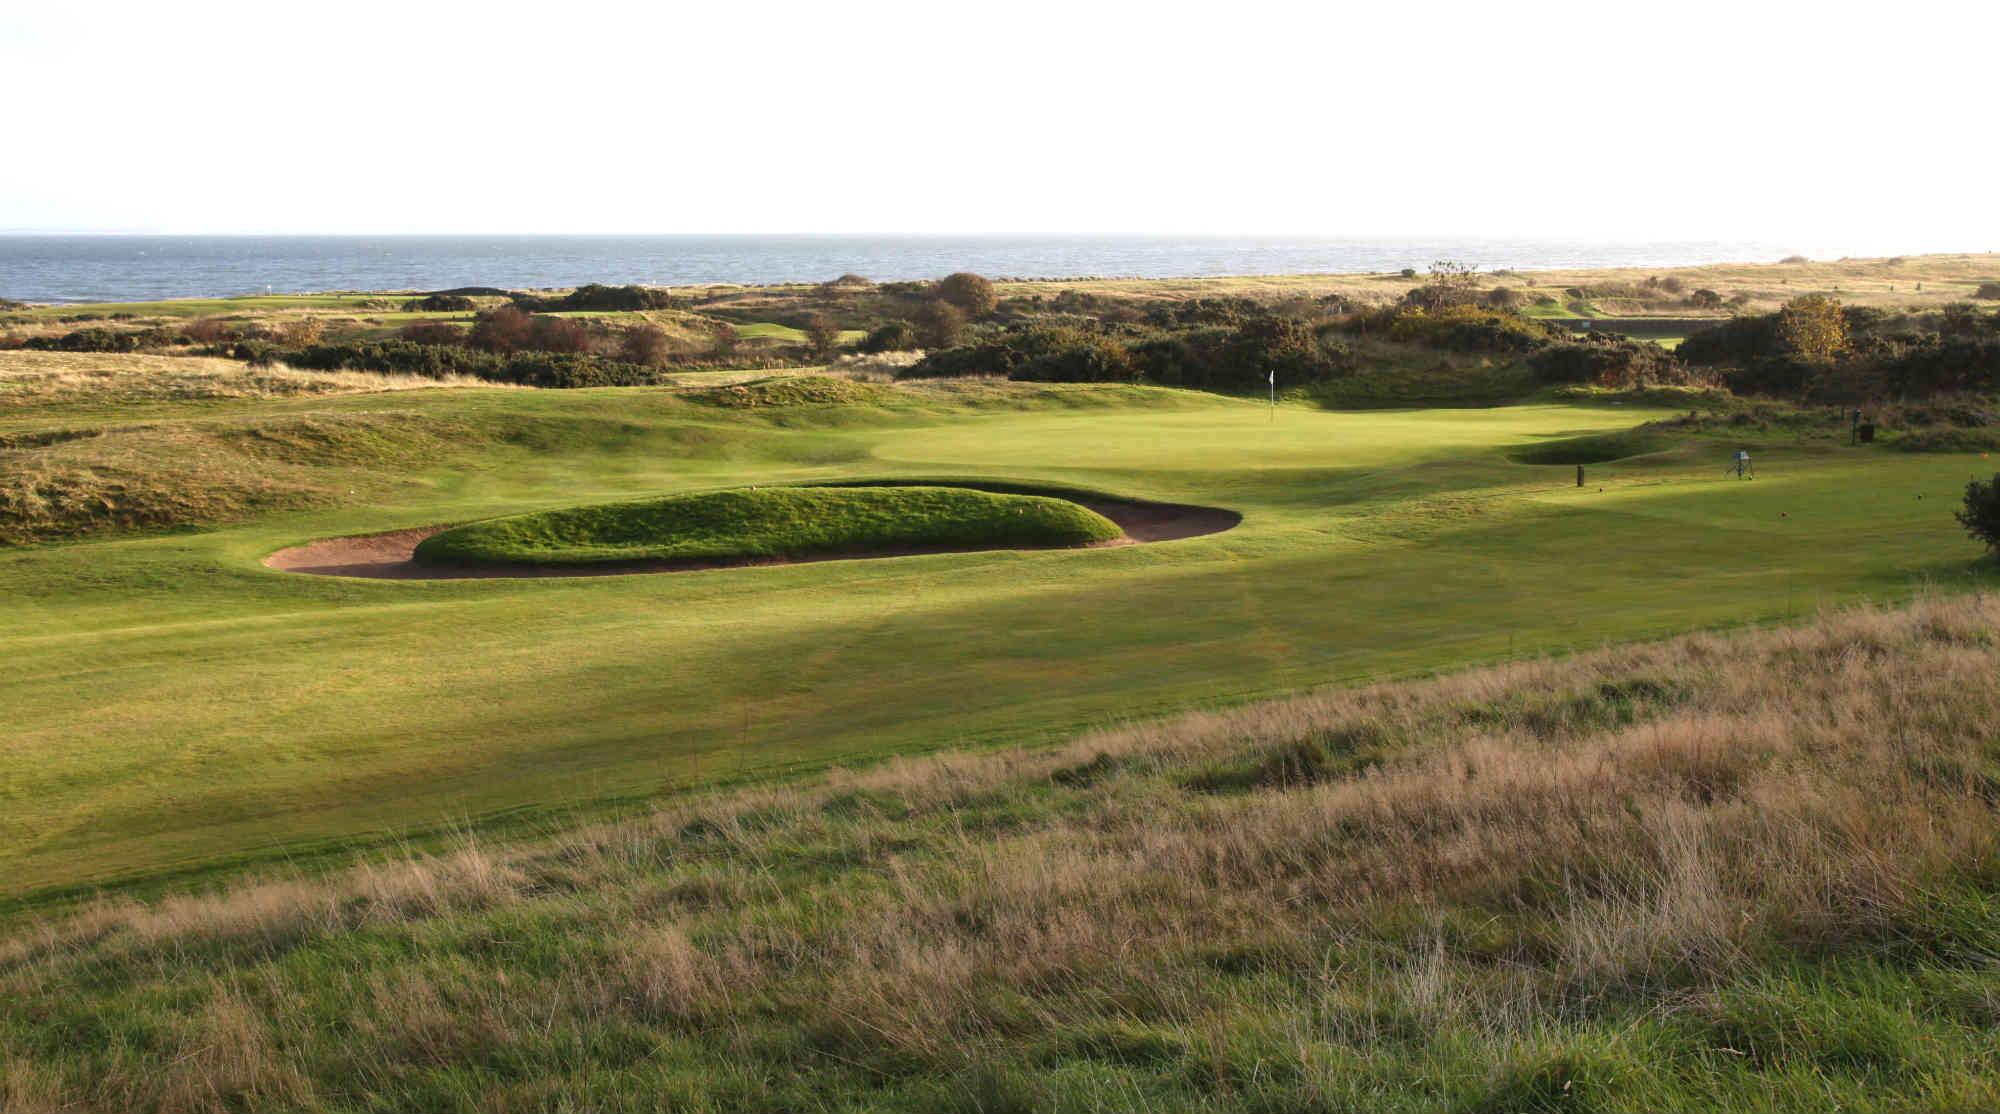 View Lundin Golf Club's beautiful golf course in striking Scotland.